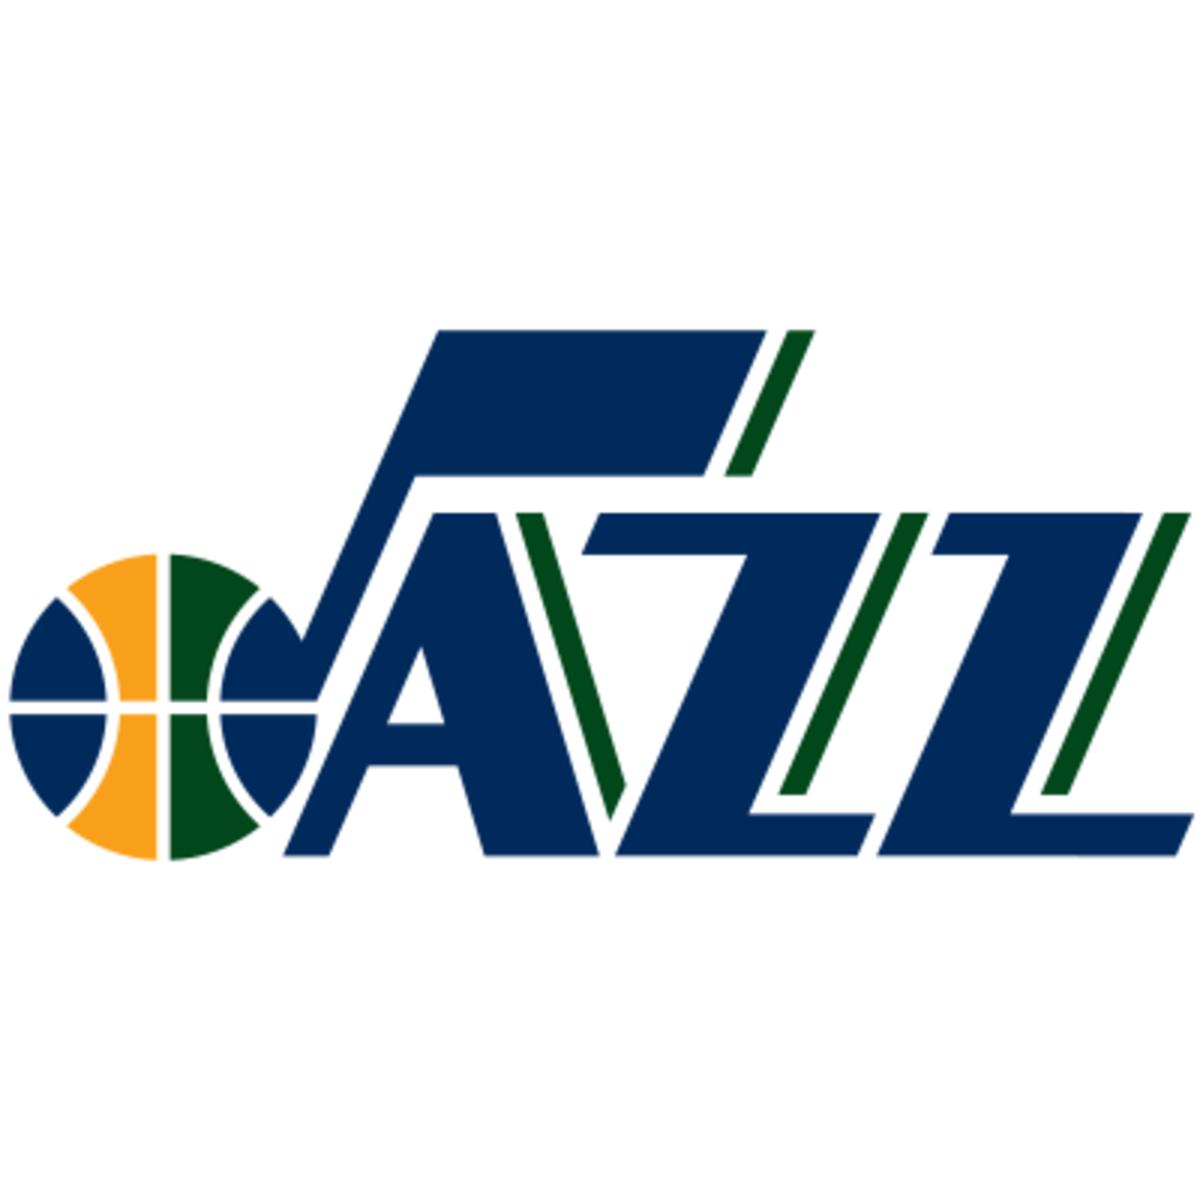 Utah Jazz